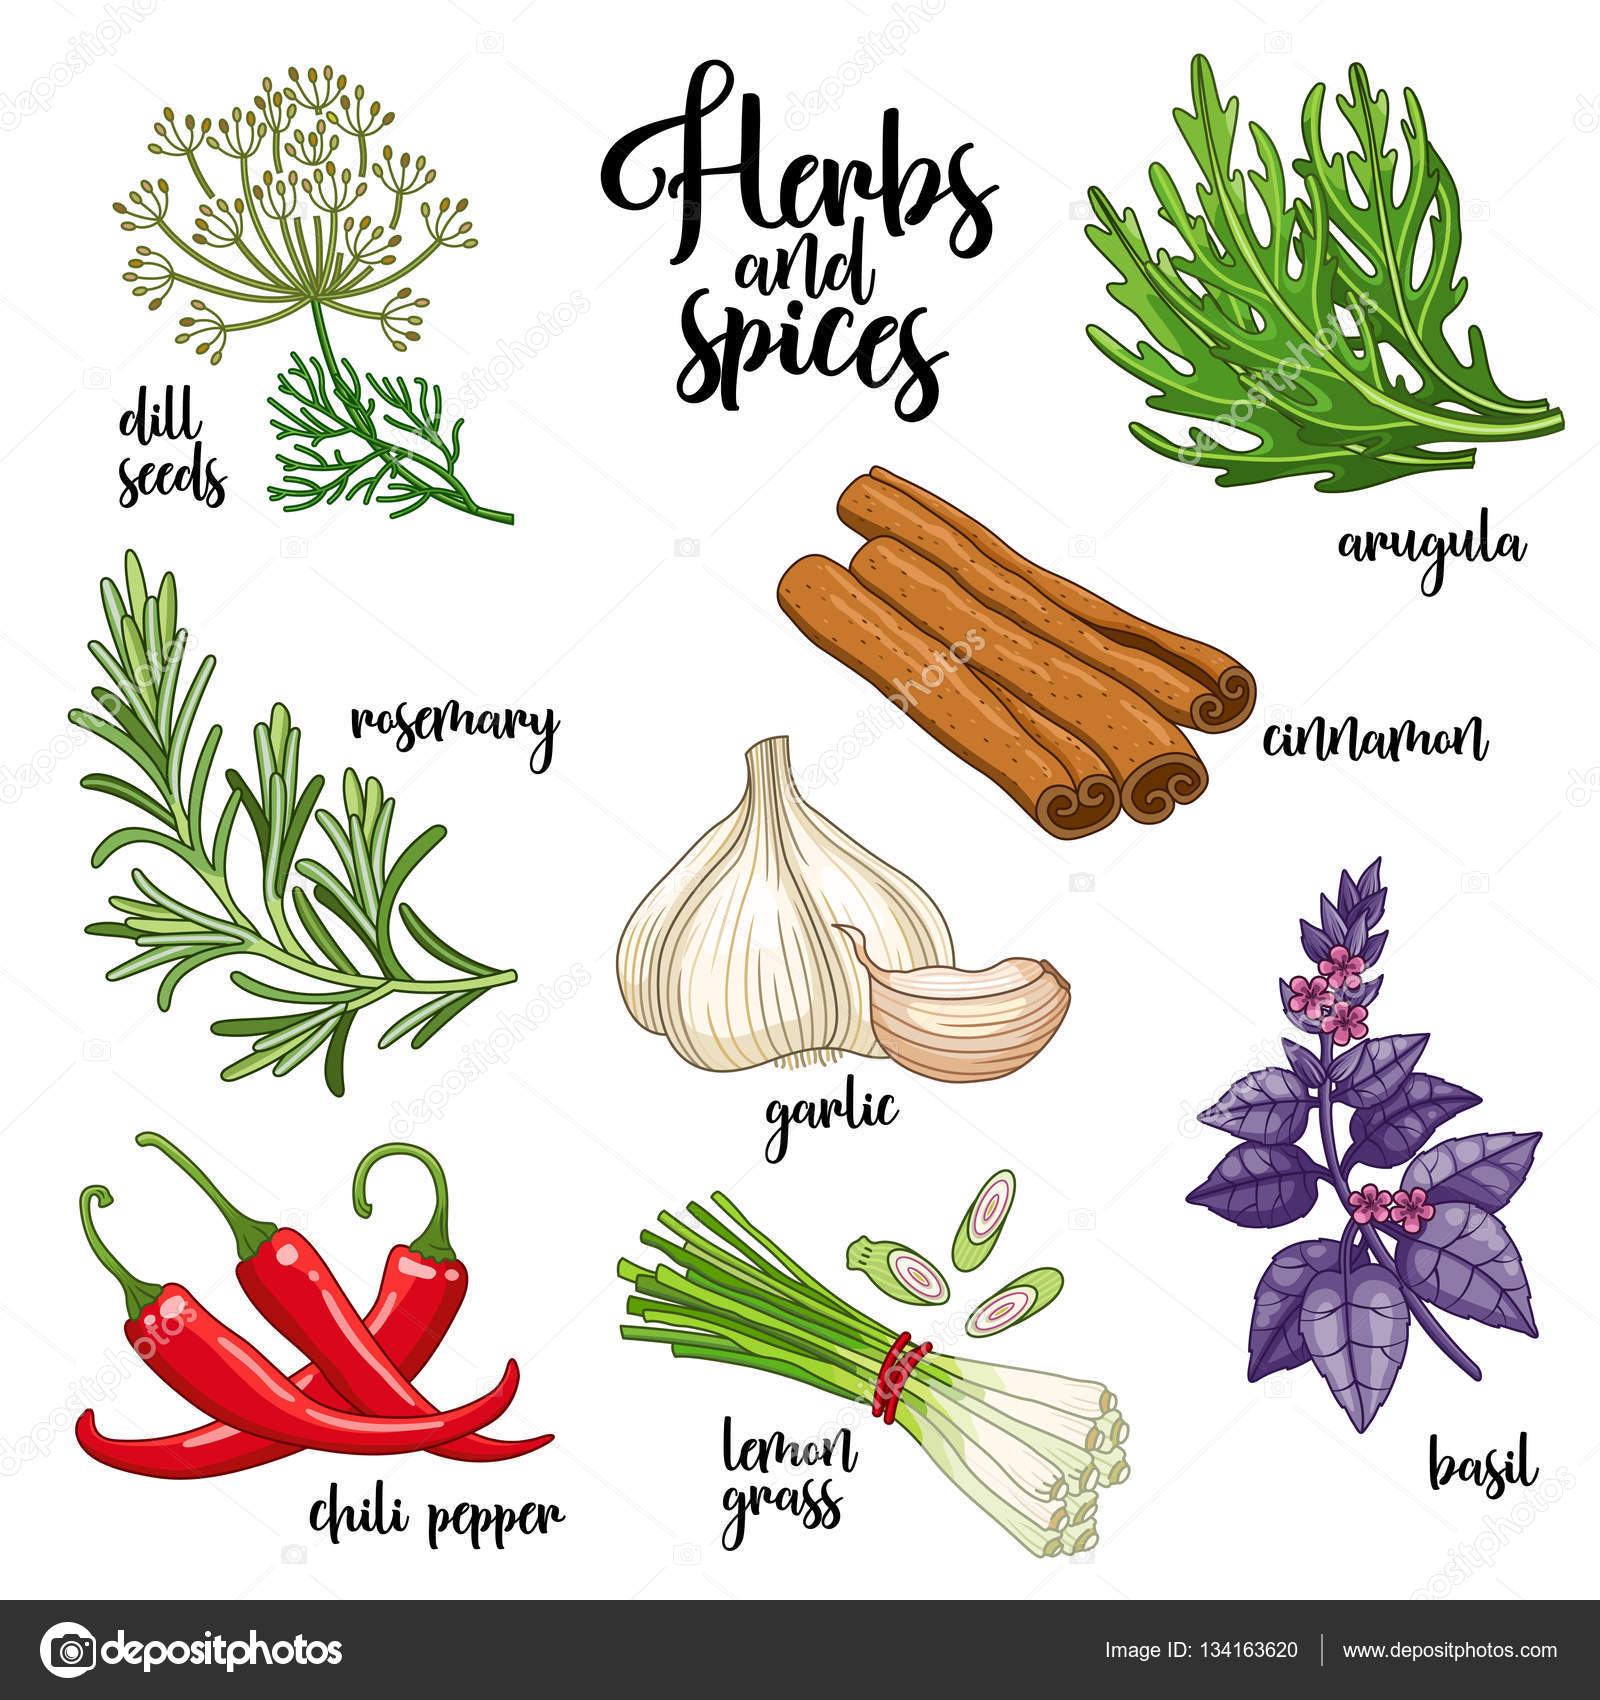 https://st3.depositphotos.com/3206641/13416/v/1600/depositphotos_134163620-stock-illustration-spices-and-herbs-vector-set.jpg